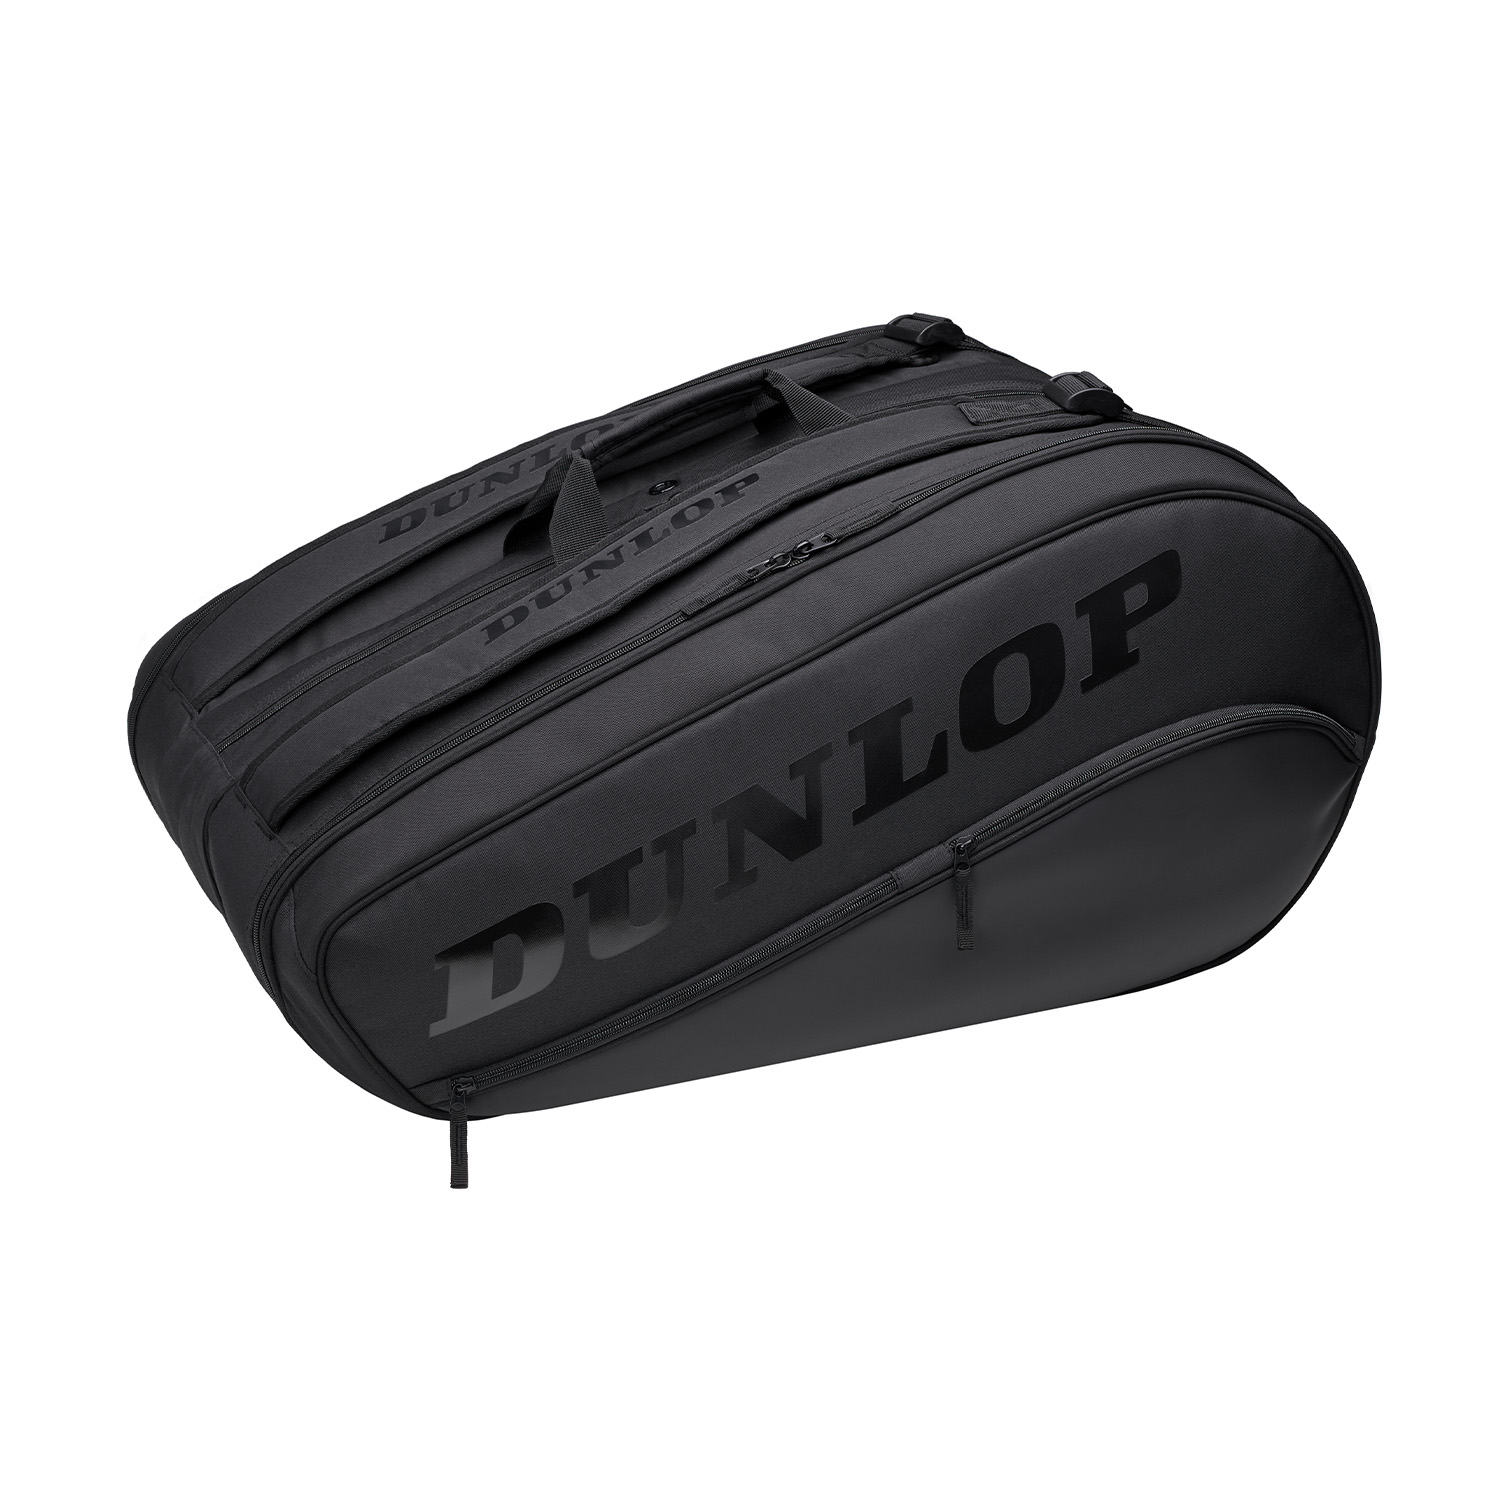 Dunlop Team X 12 Thermo Bag - Black